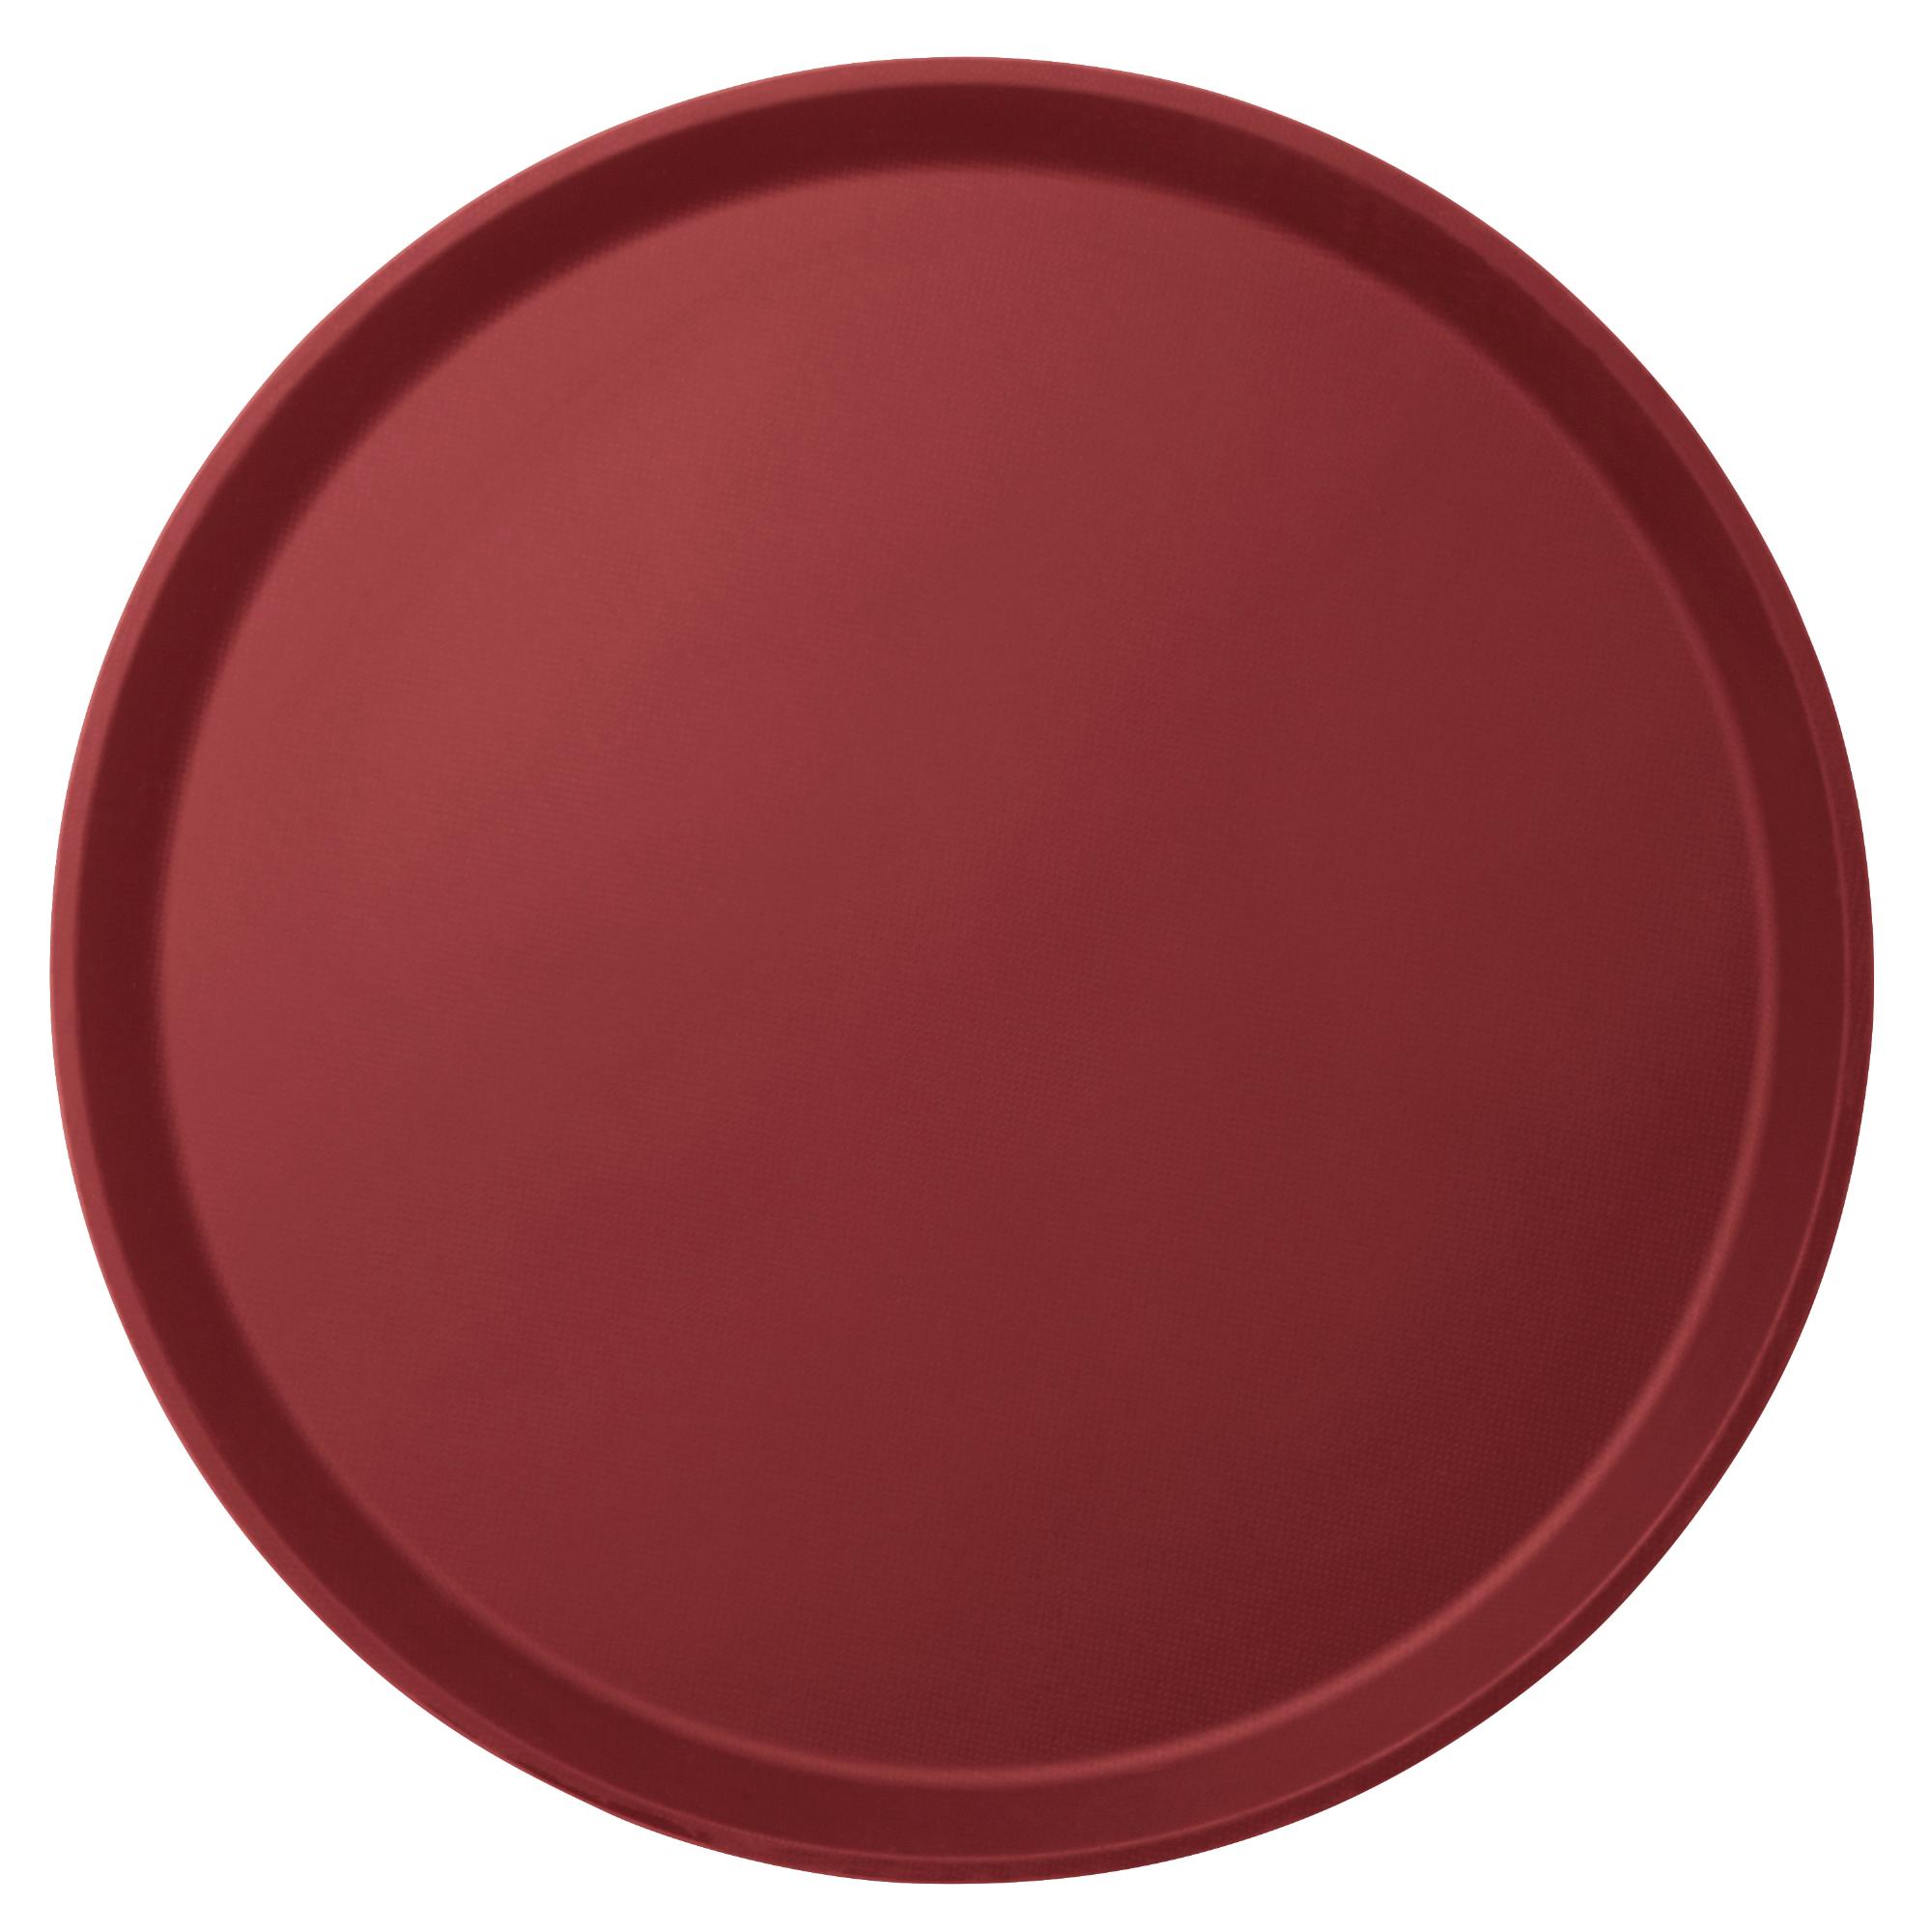 Camtread serving tray, round, non-slip surface, burgundy, 405mm